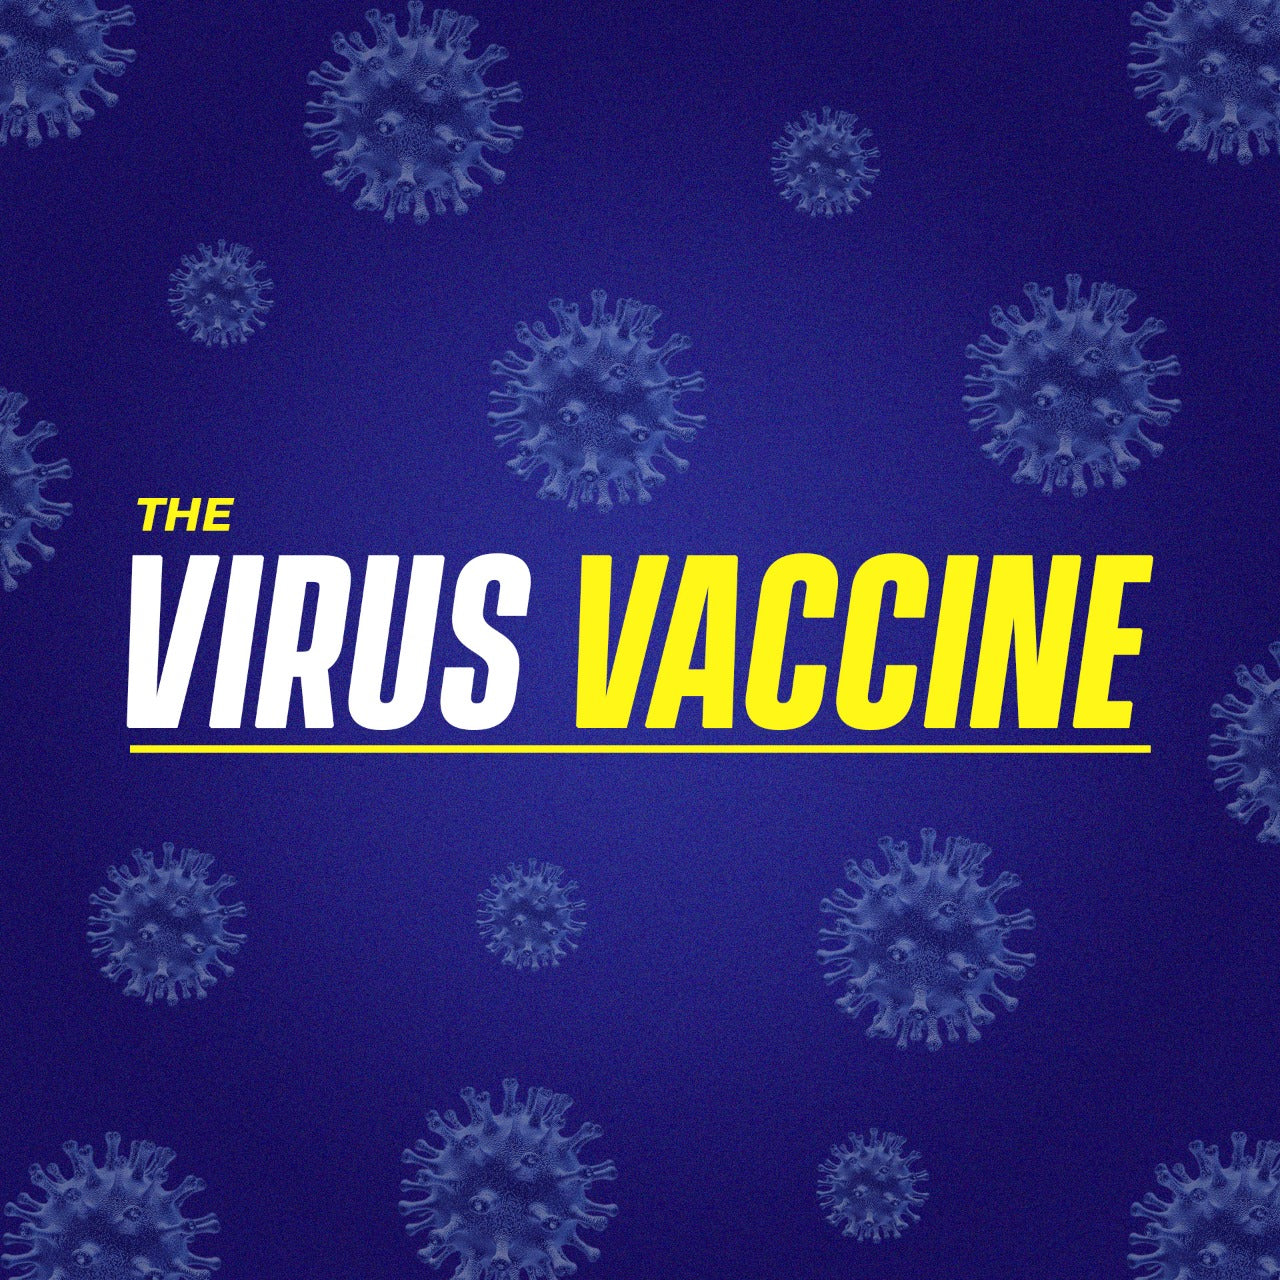 The Virus Vaccine - No Fear Mp4